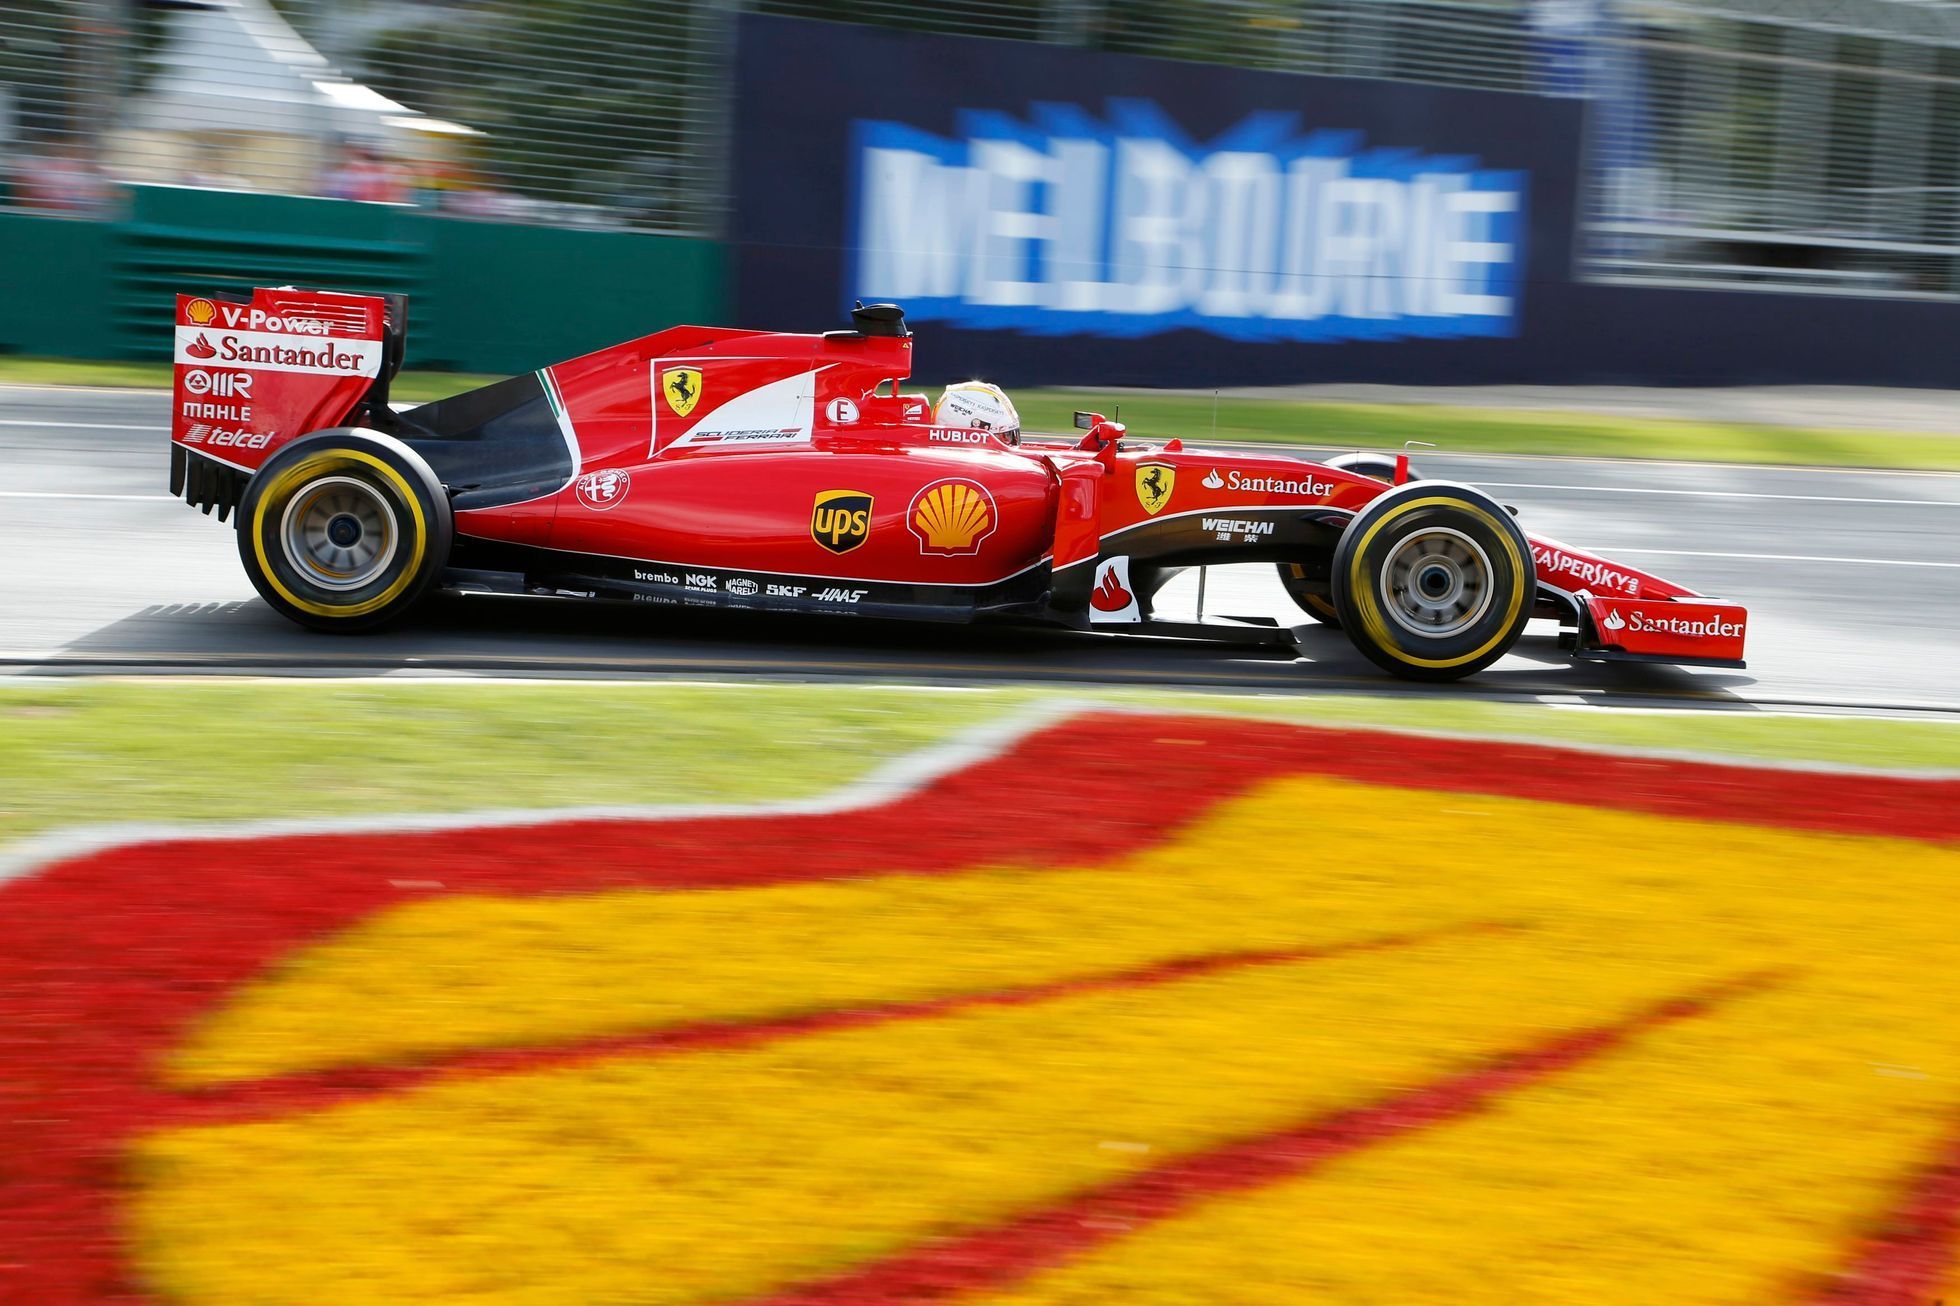 Ferrari Formula One driver Sebastian Vettel of Germany drives during the qualifying session of the Australian F1 Grand Prix at the Albert Park circuit in Melbourne